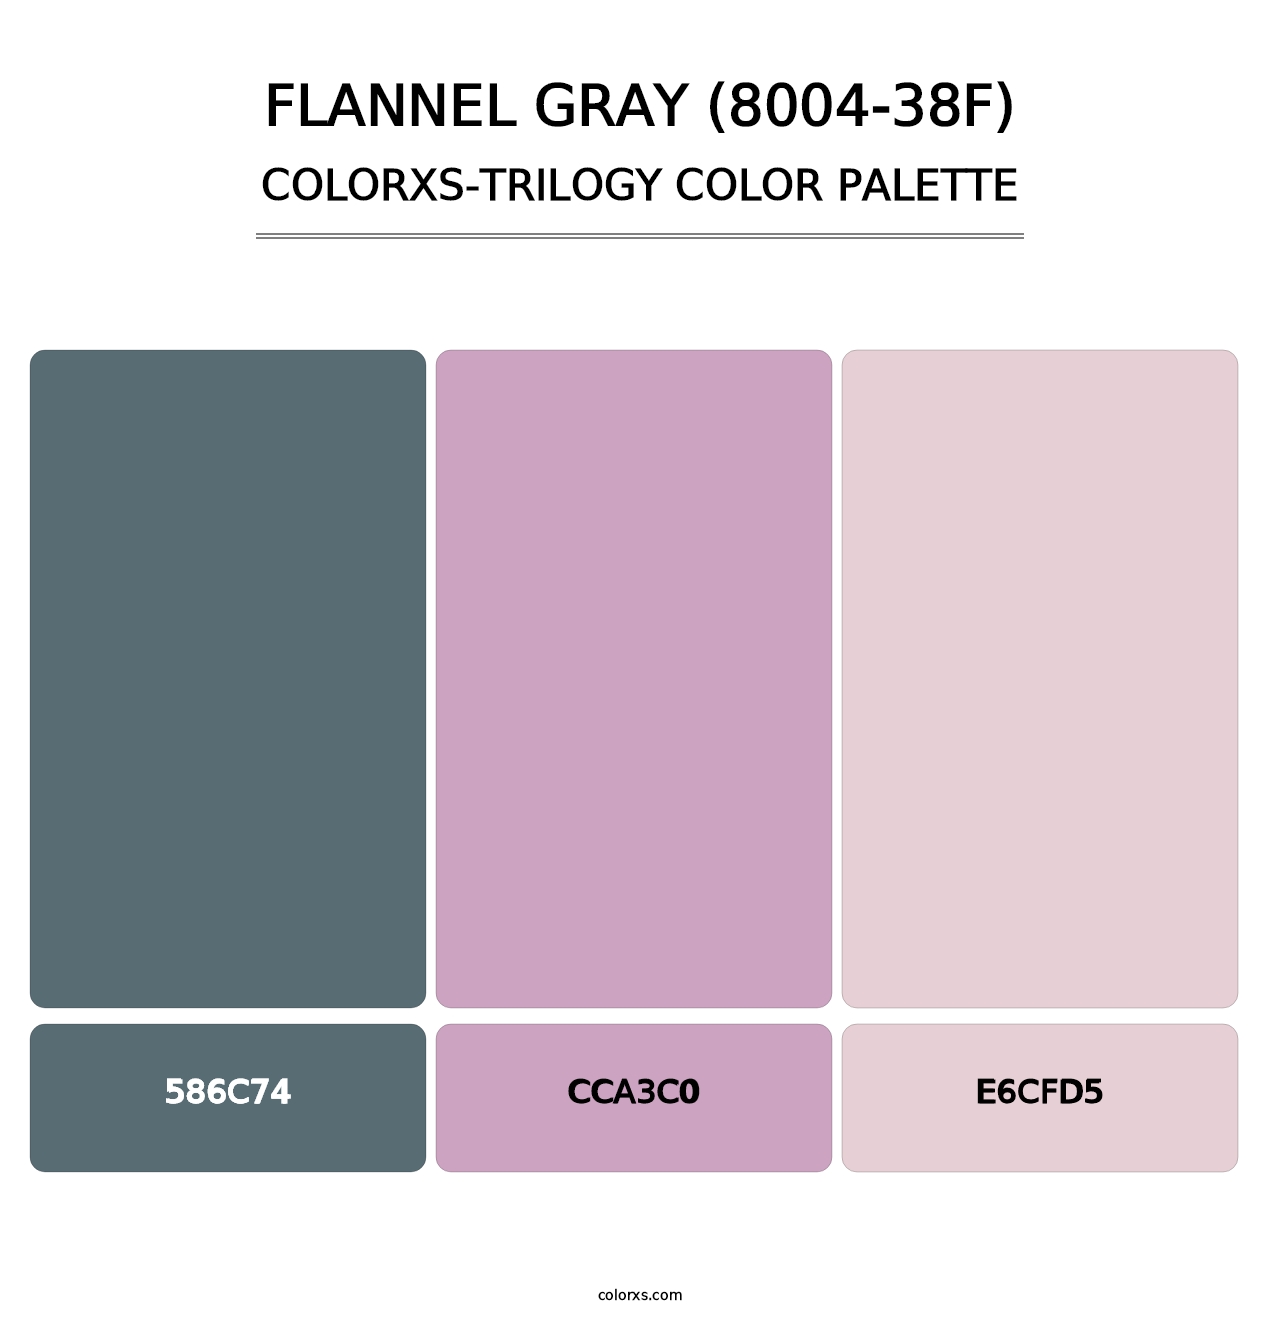 Flannel Gray (8004-38F) - Colorxs Trilogy Palette